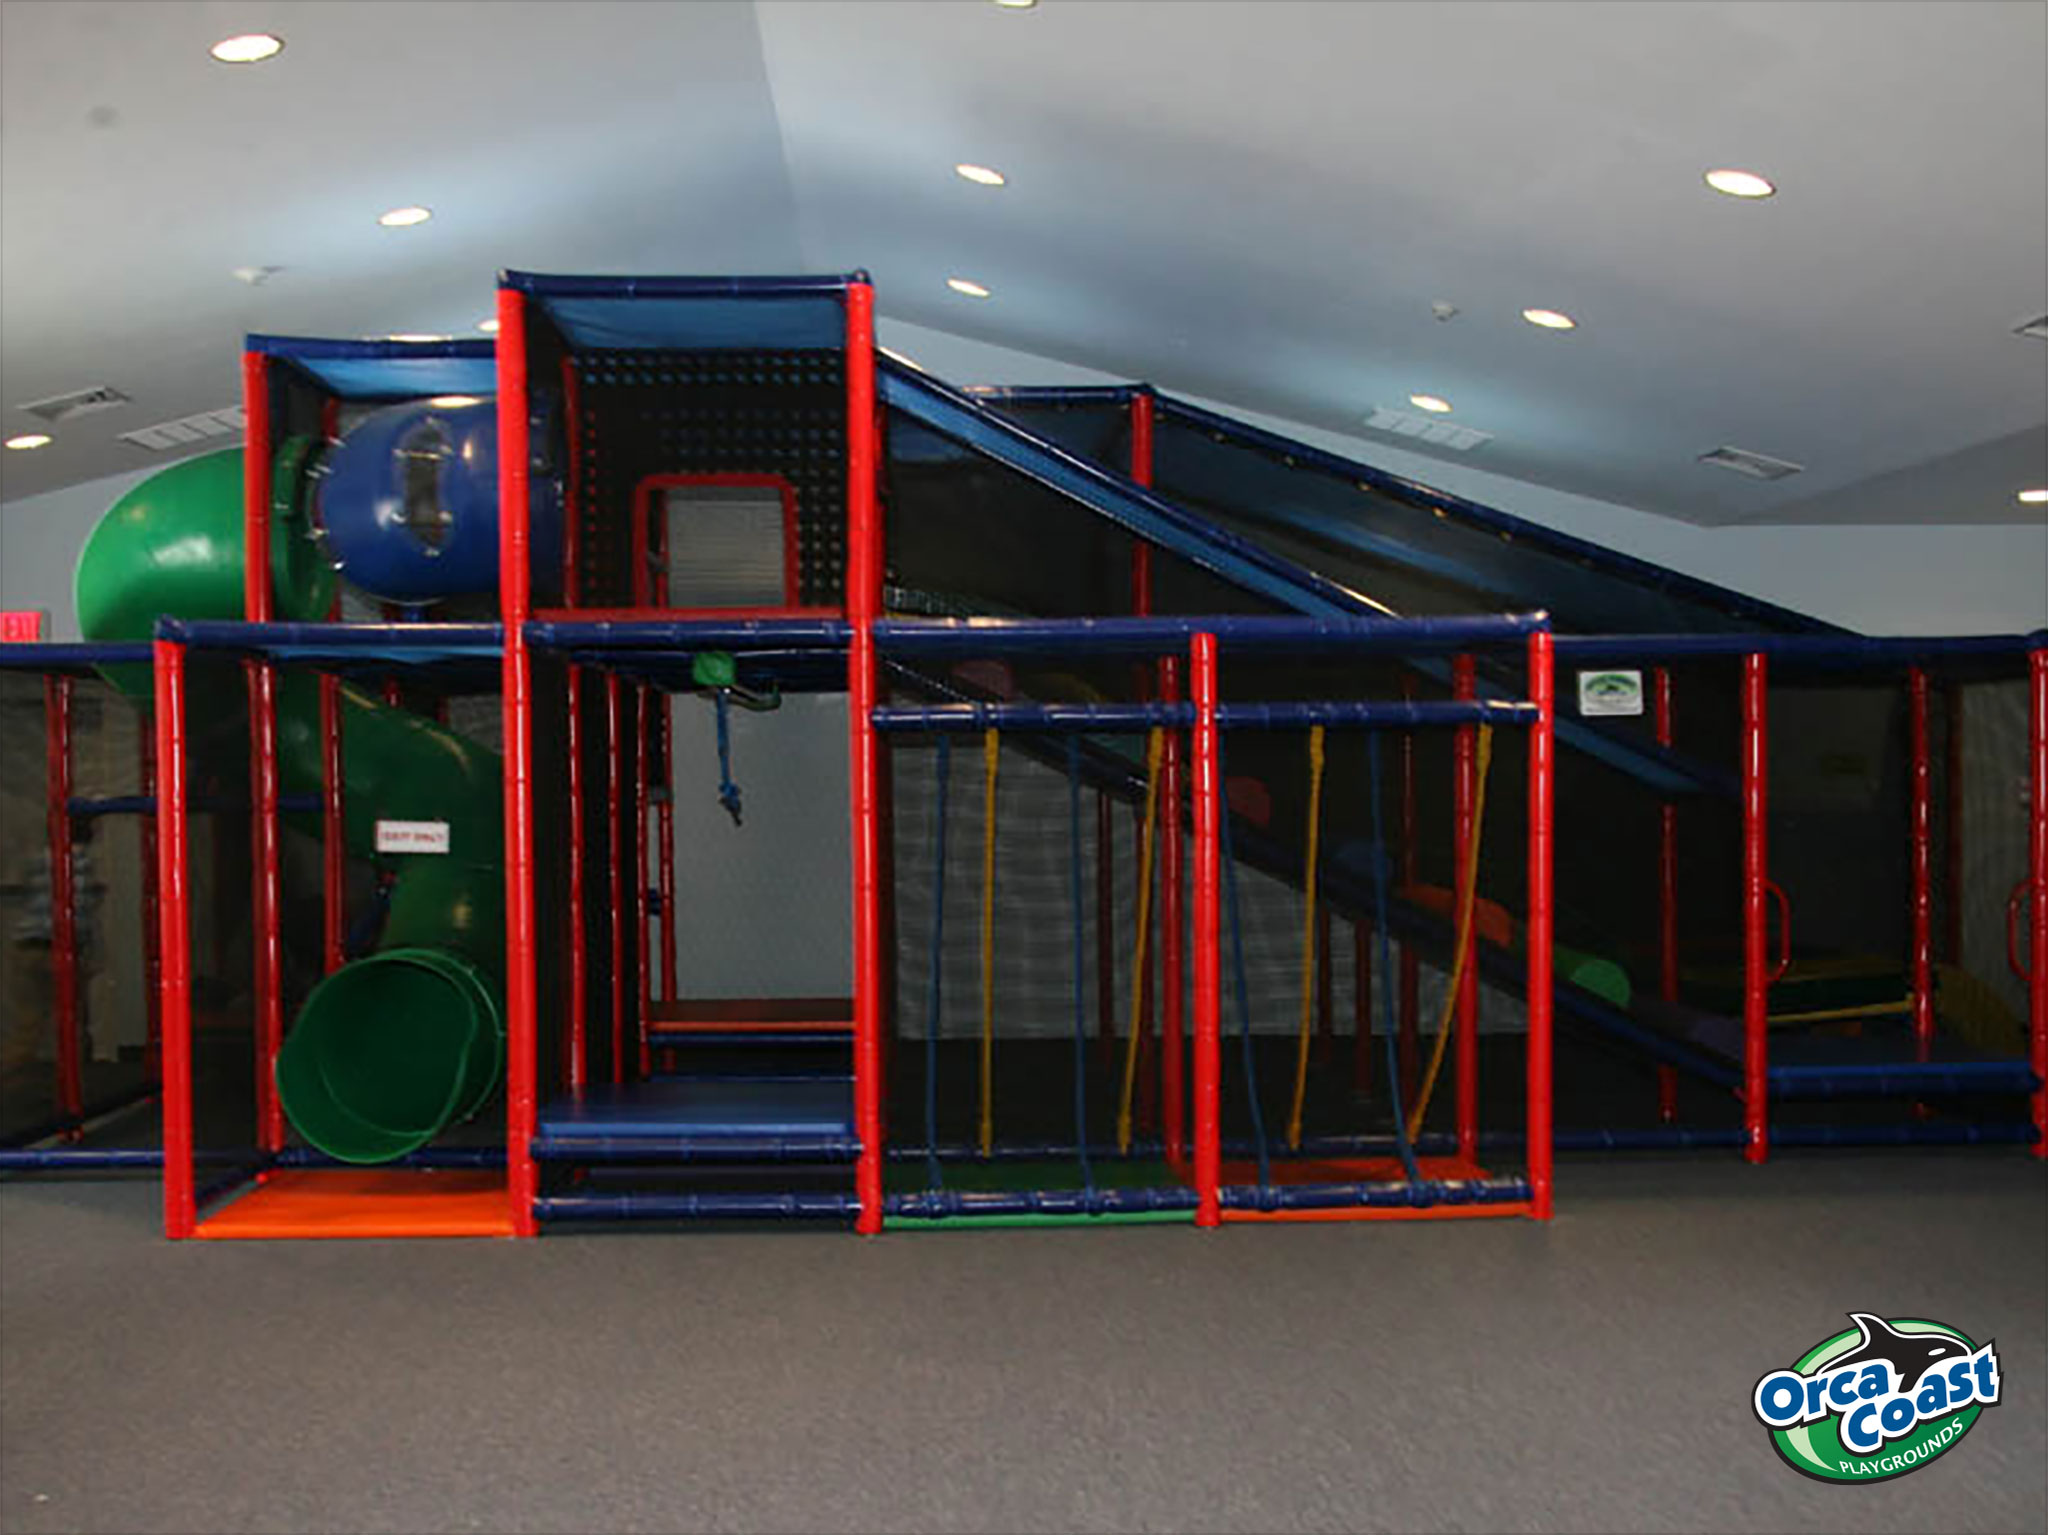 All Kids First Indoor Playground: A World of Fun in Vineland, NJ